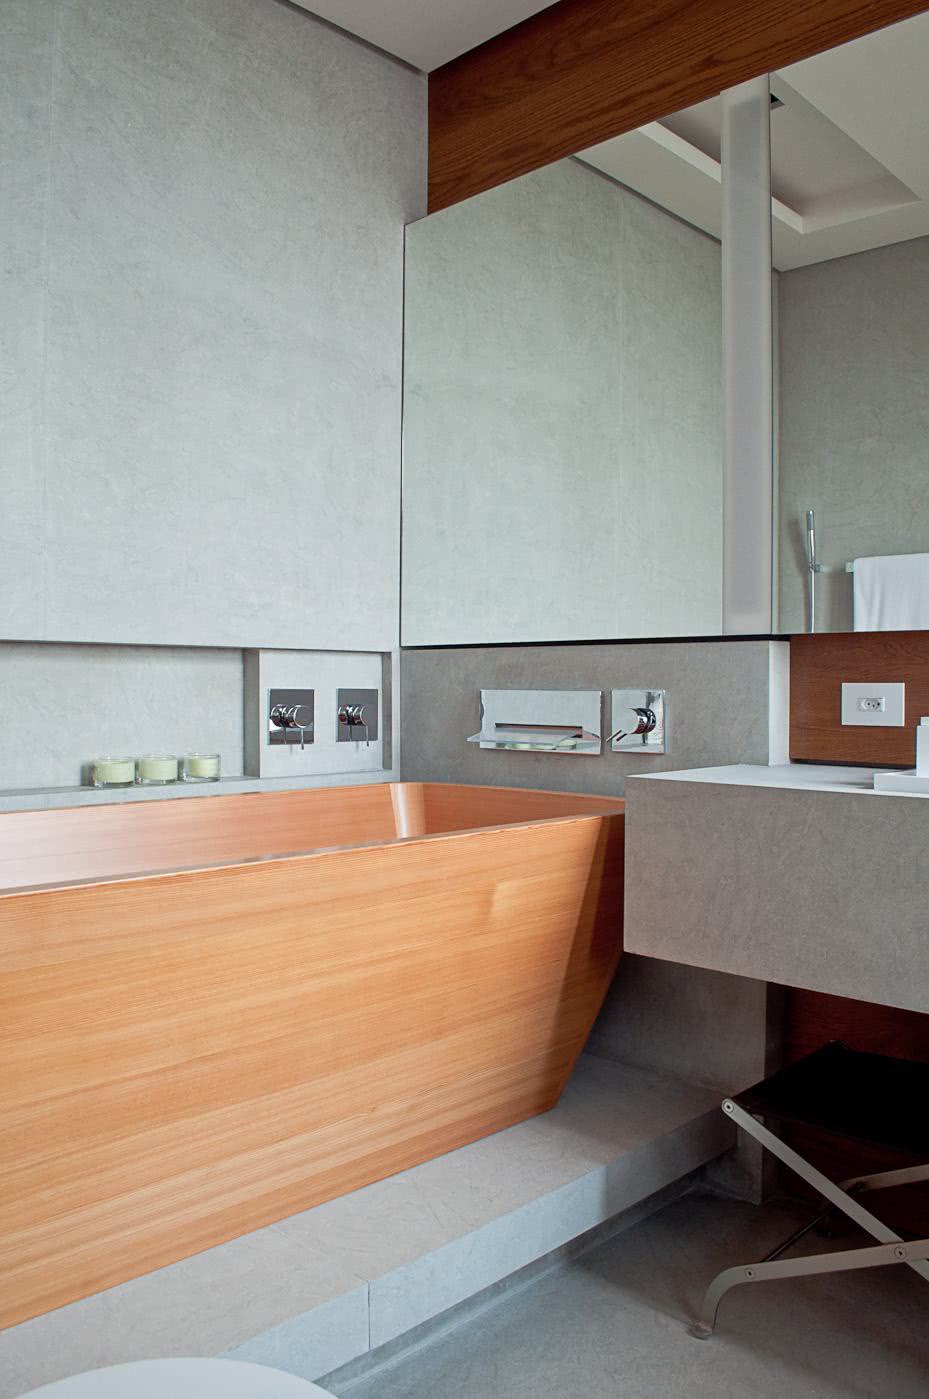 Salle de bain avec baignoire en bois